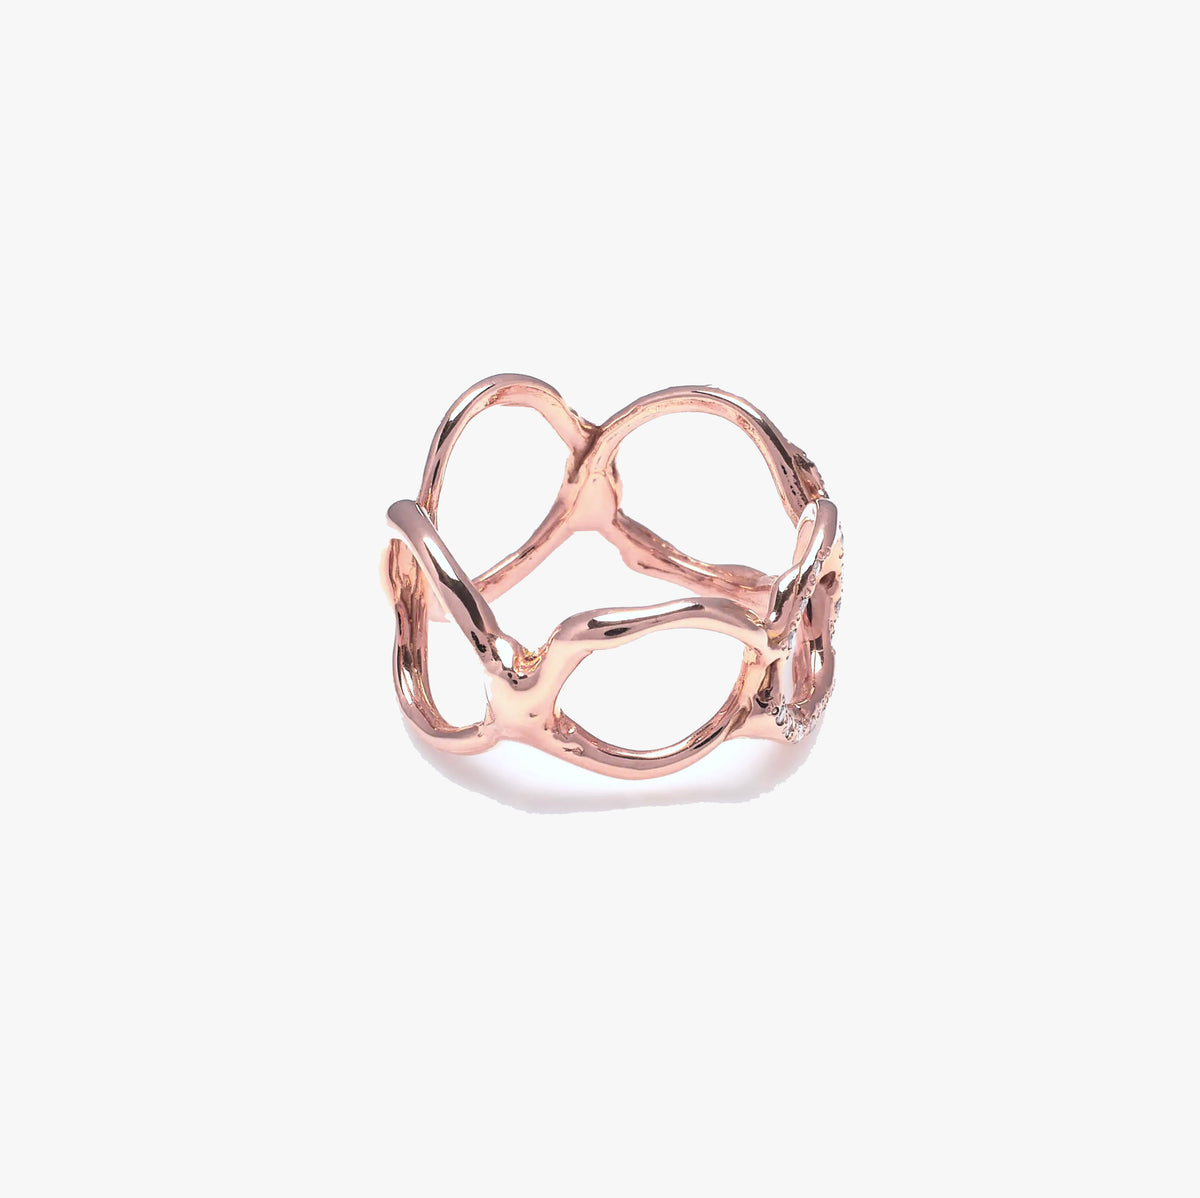 Rose gold reticolo ring with sporadic diamonds